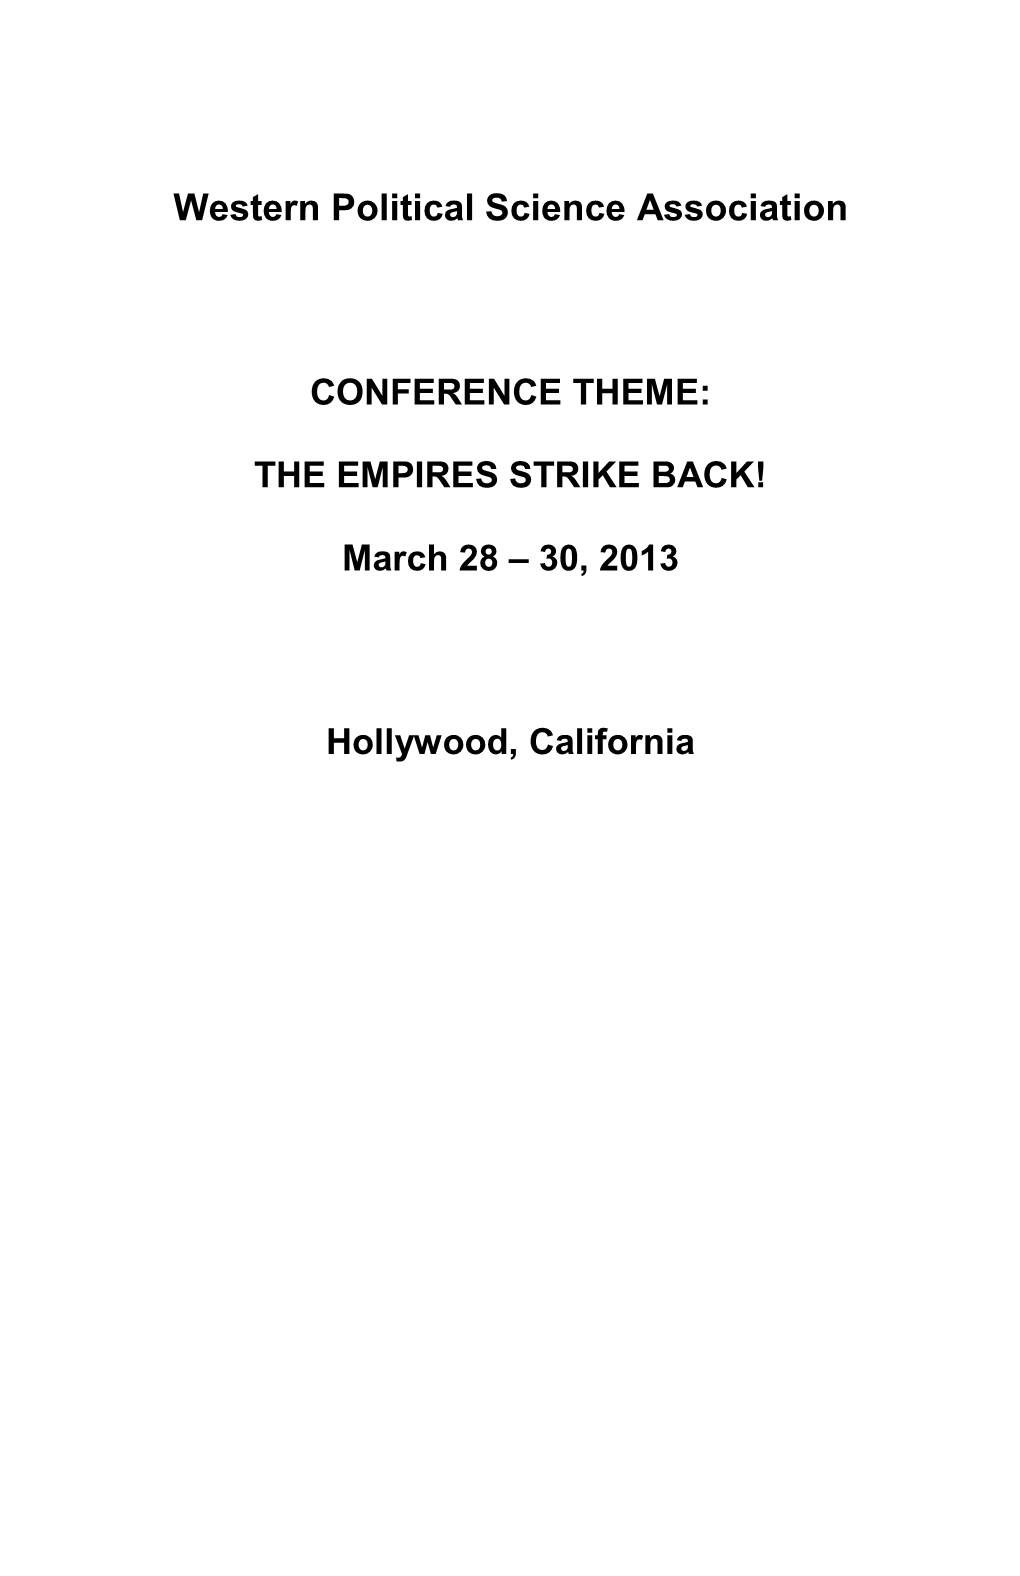 March 28 – 30, 2013 Hollywood, California